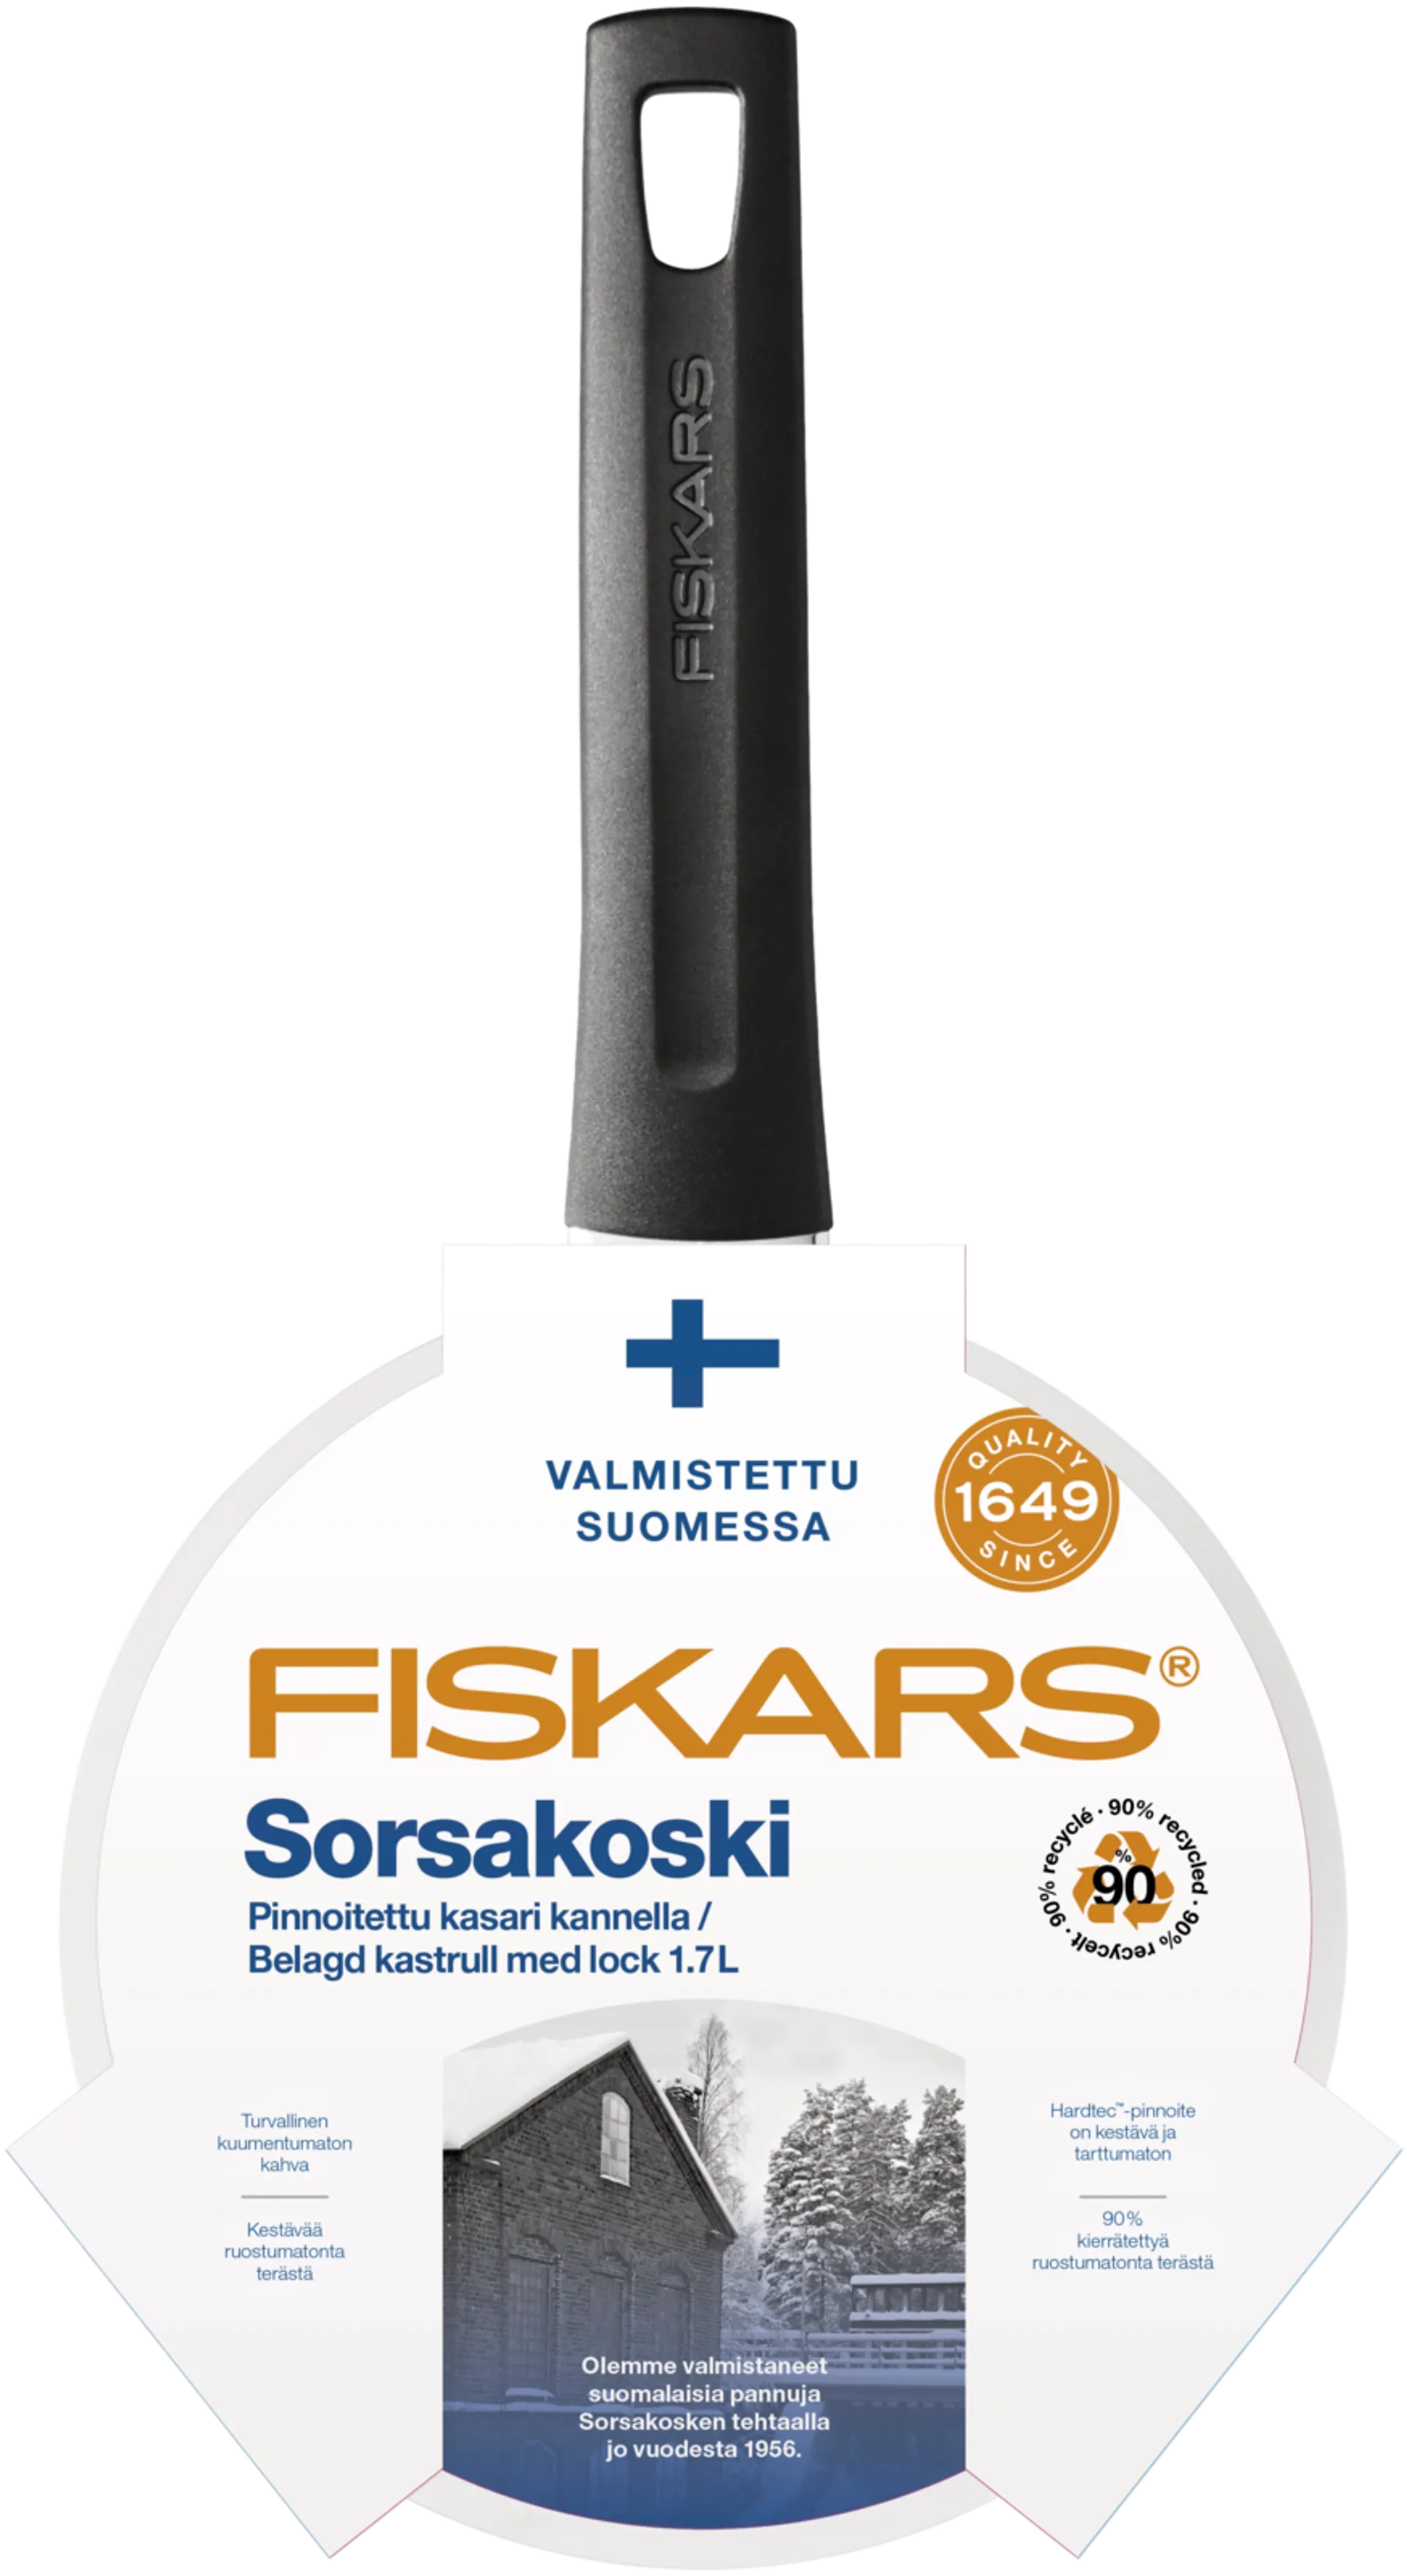 Fiskars Sorsakoski kasari 1,7l kannella - 2